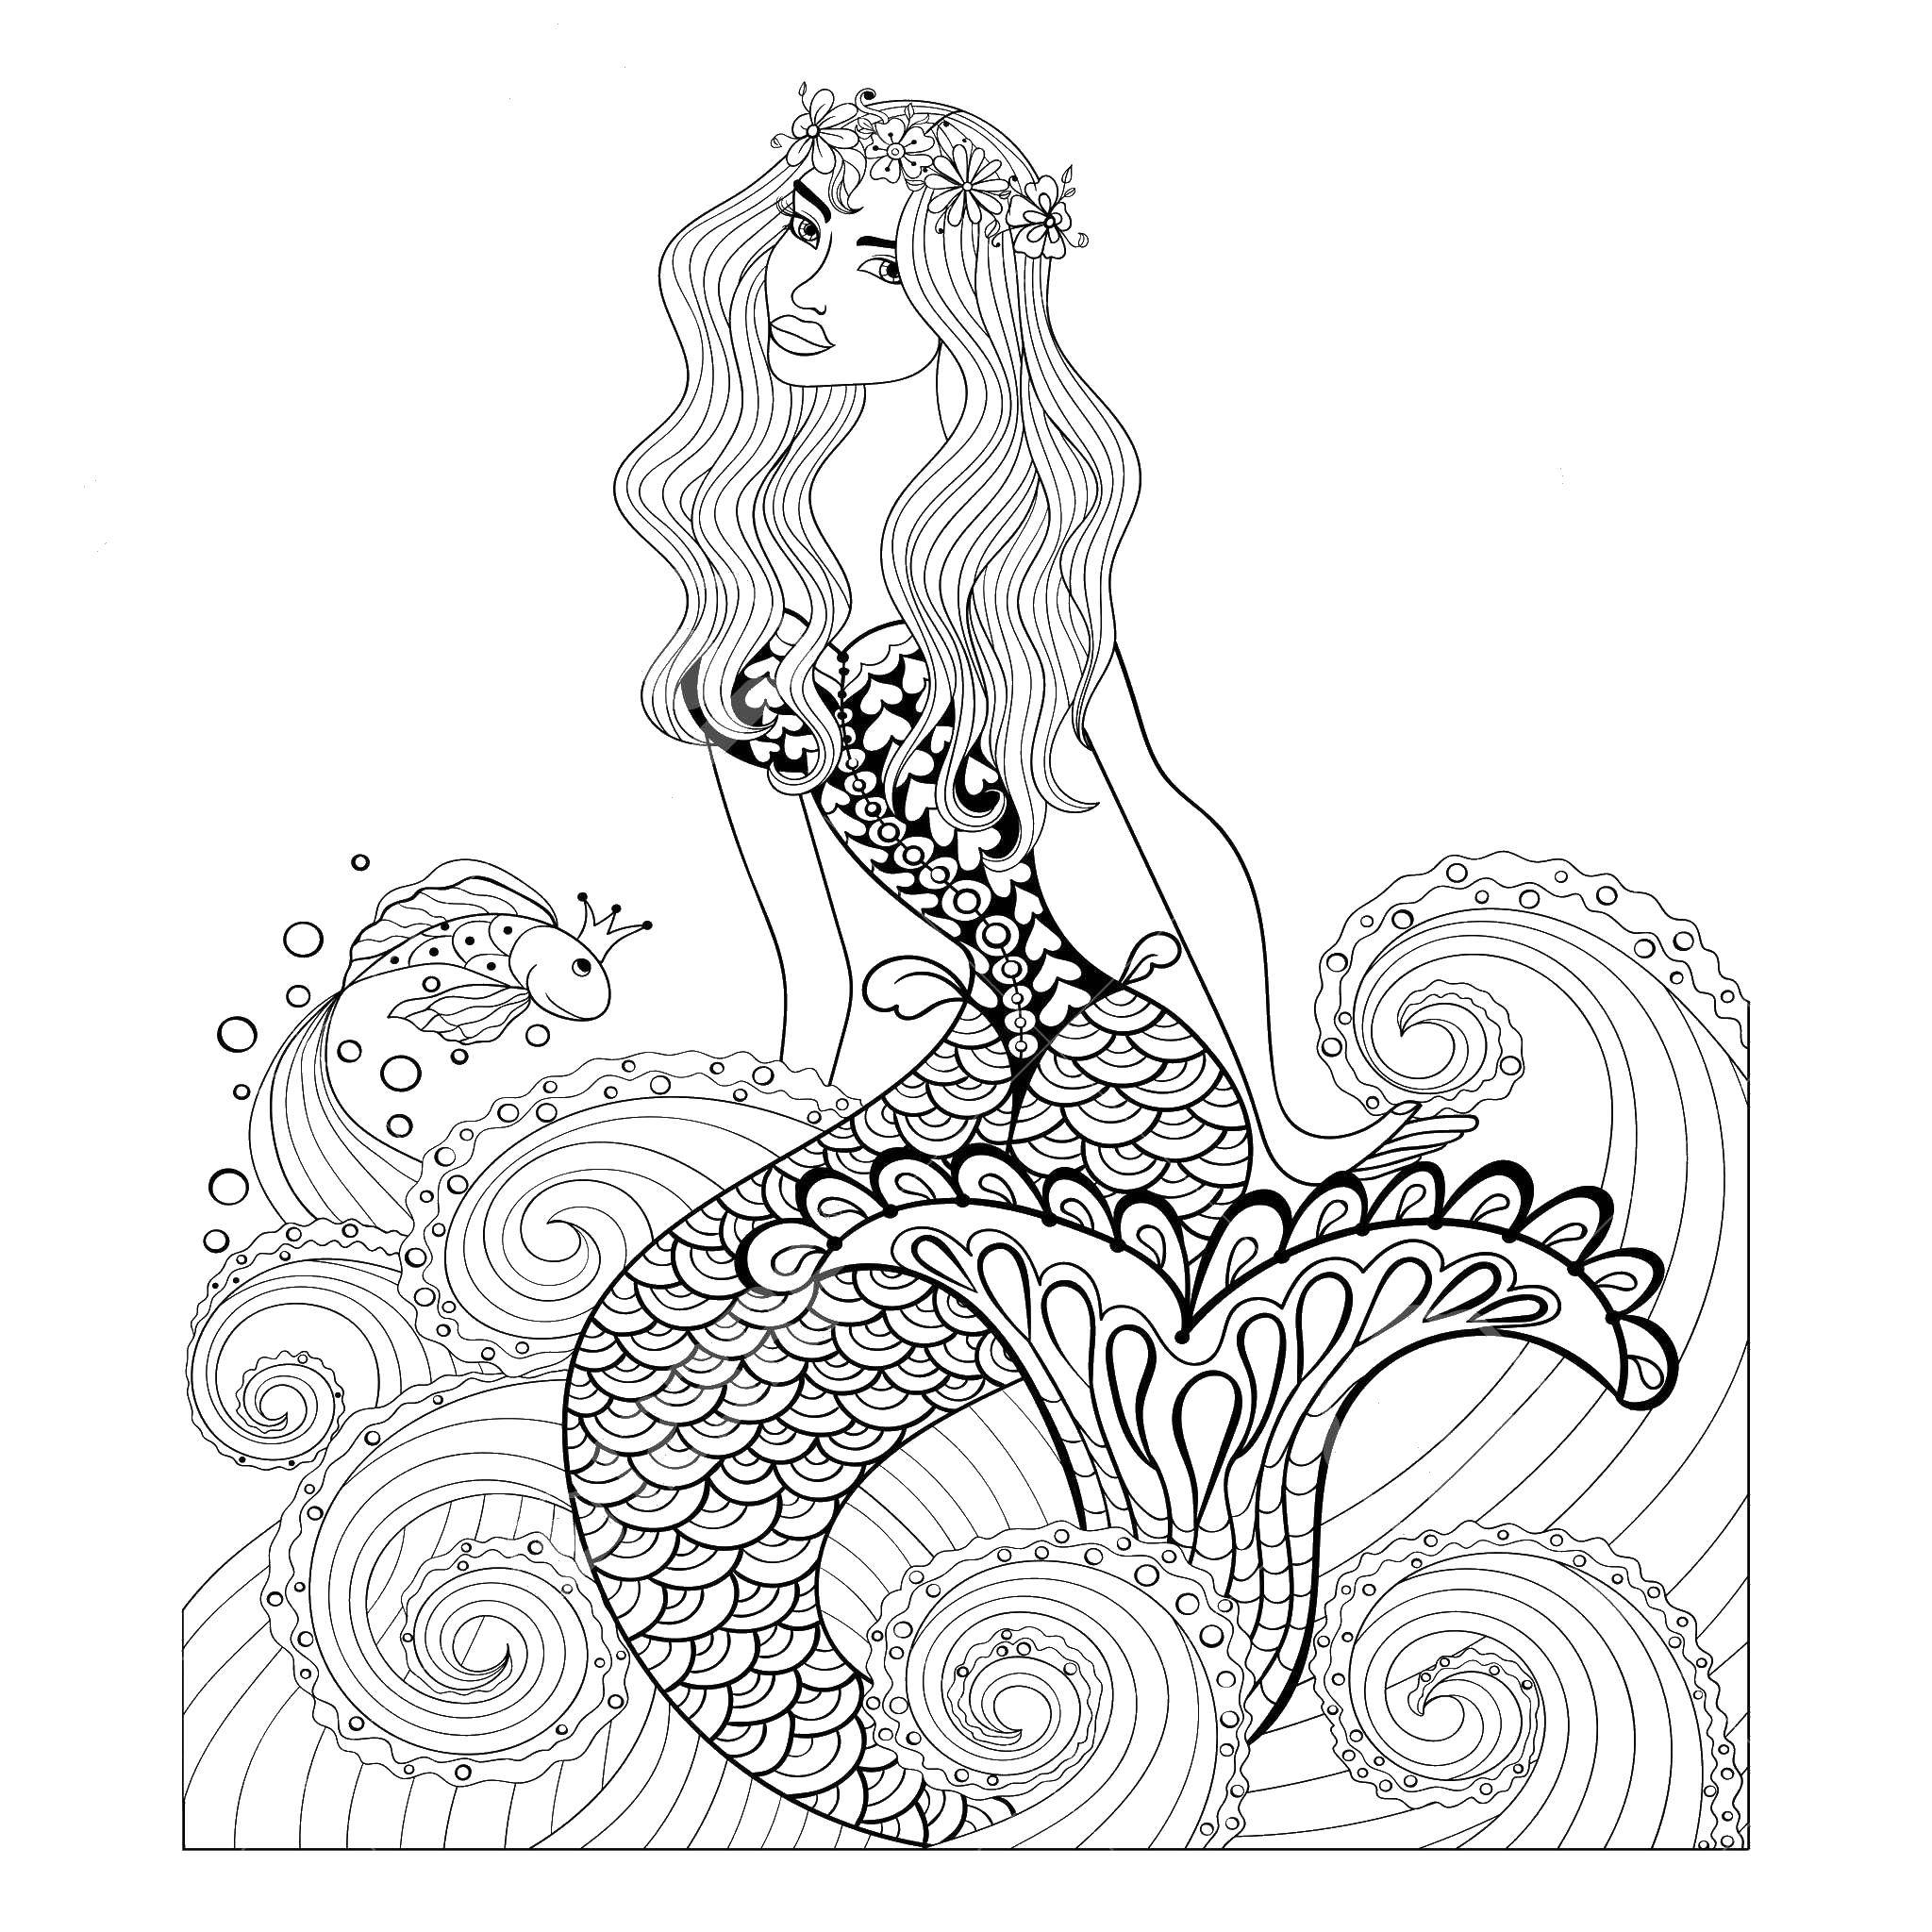 Coloring Mermaid and waves. Category coloring. Tags:  mermaid, waves, fish.